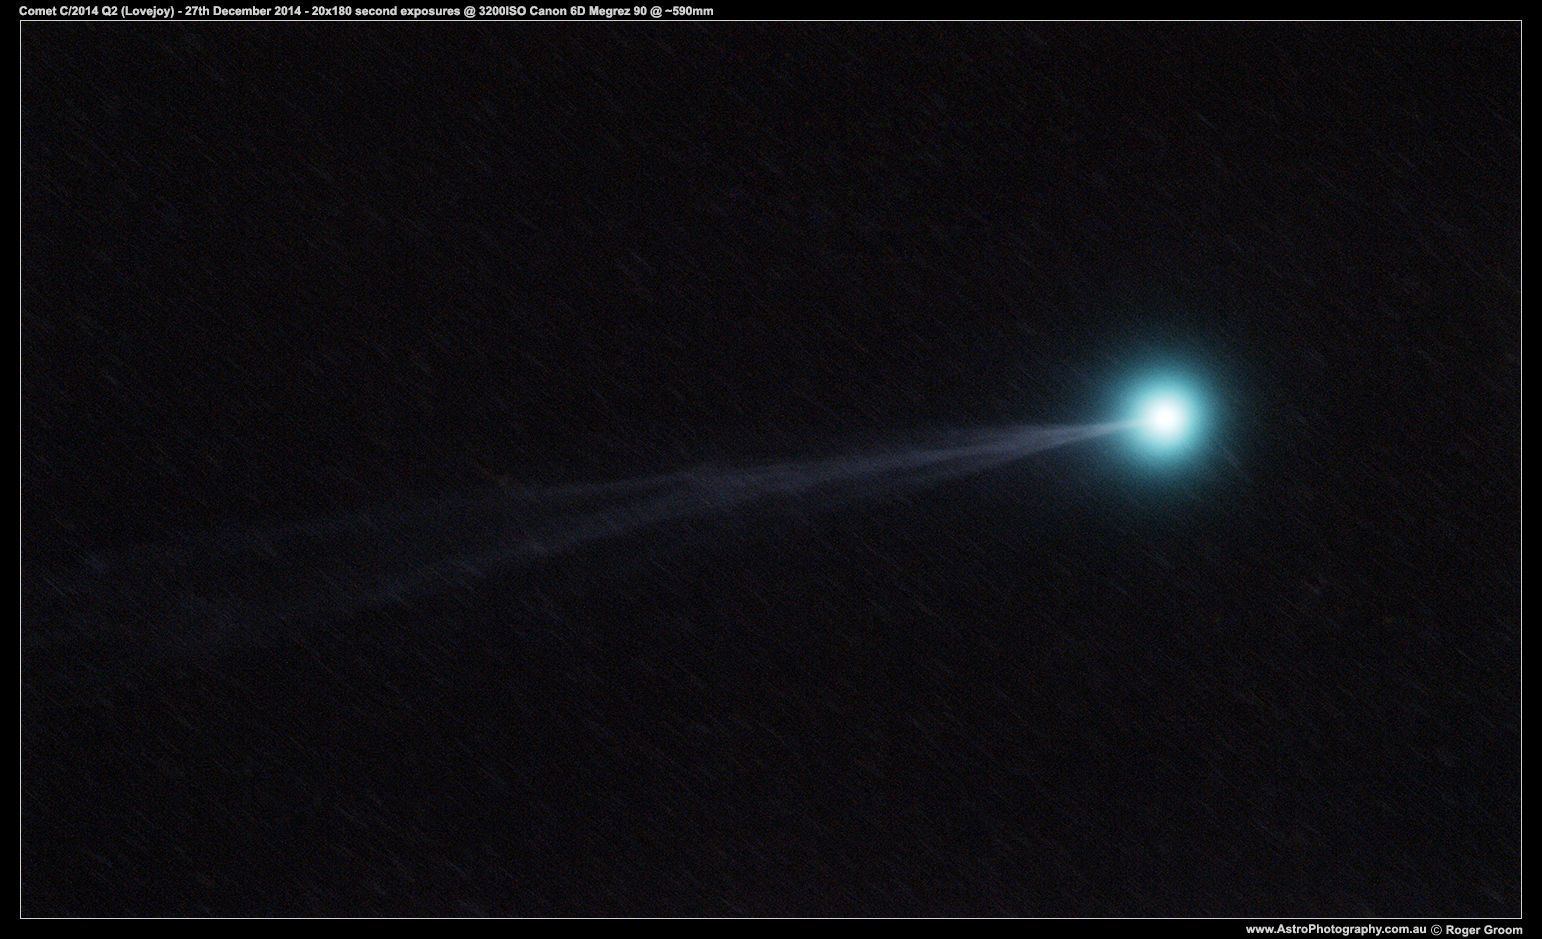 Comet C/2014 Q2 (Lovejoy) 27th December 2014. 20x180s @ 3200ISO